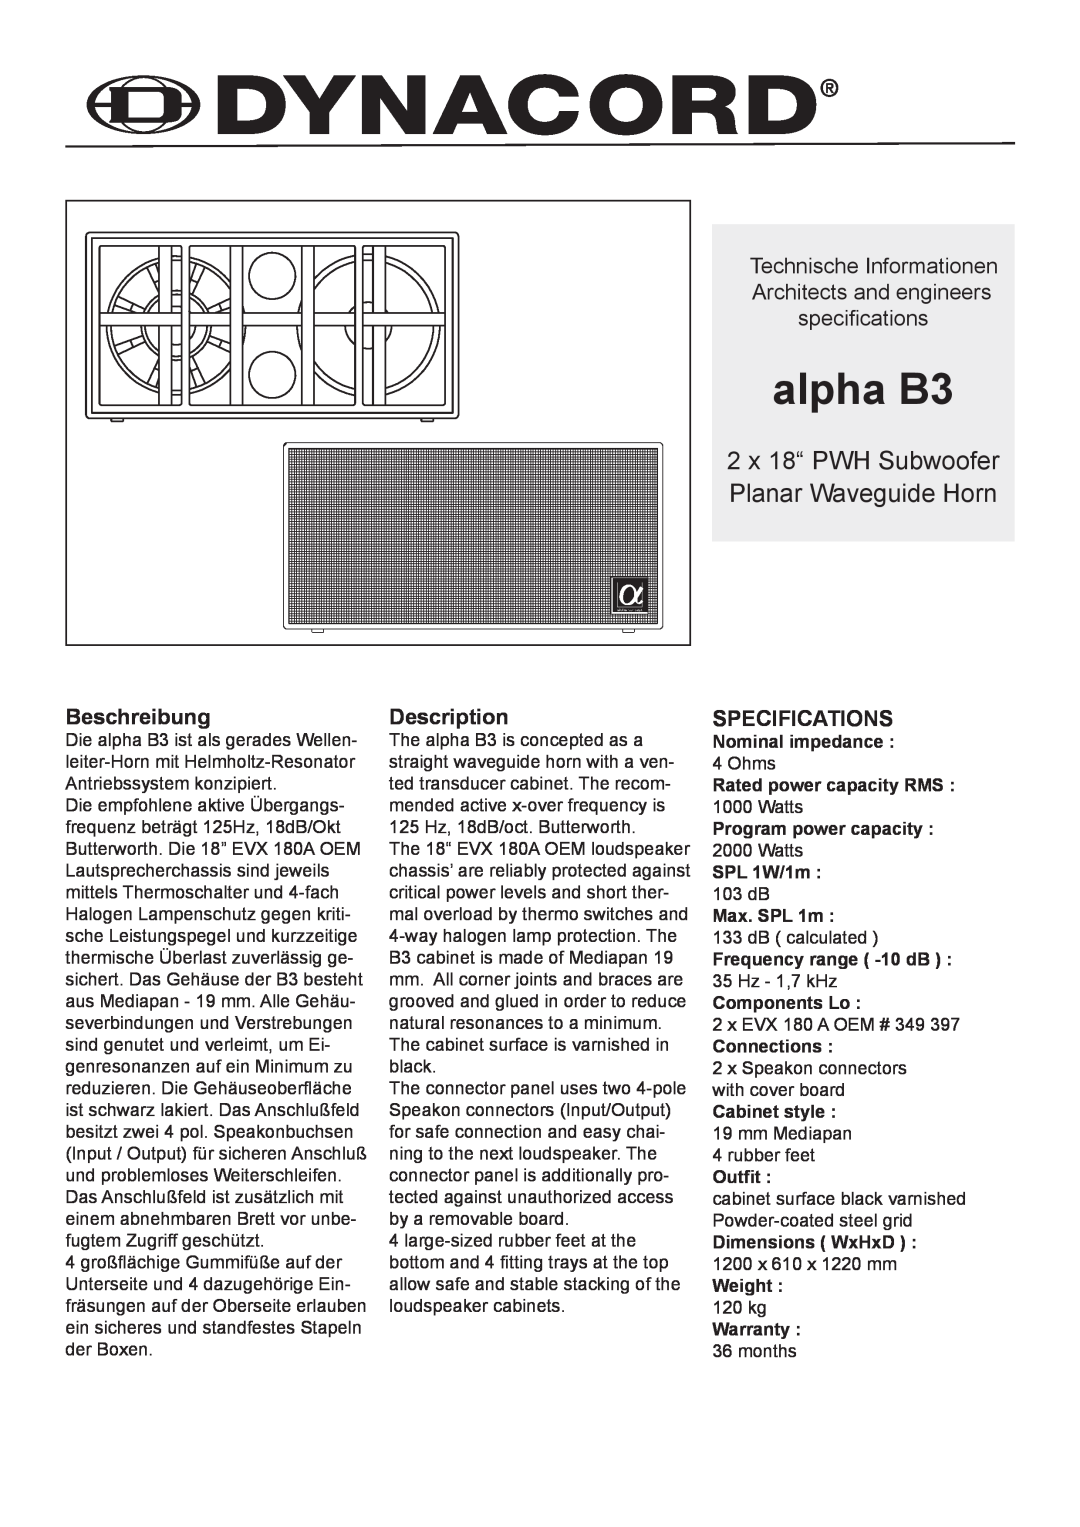 Dynacord alpha B3 specifications 2 x 18“ PWH Subwoofer Planar Waveguide Horn, Beschreibung, Description, Specifications 